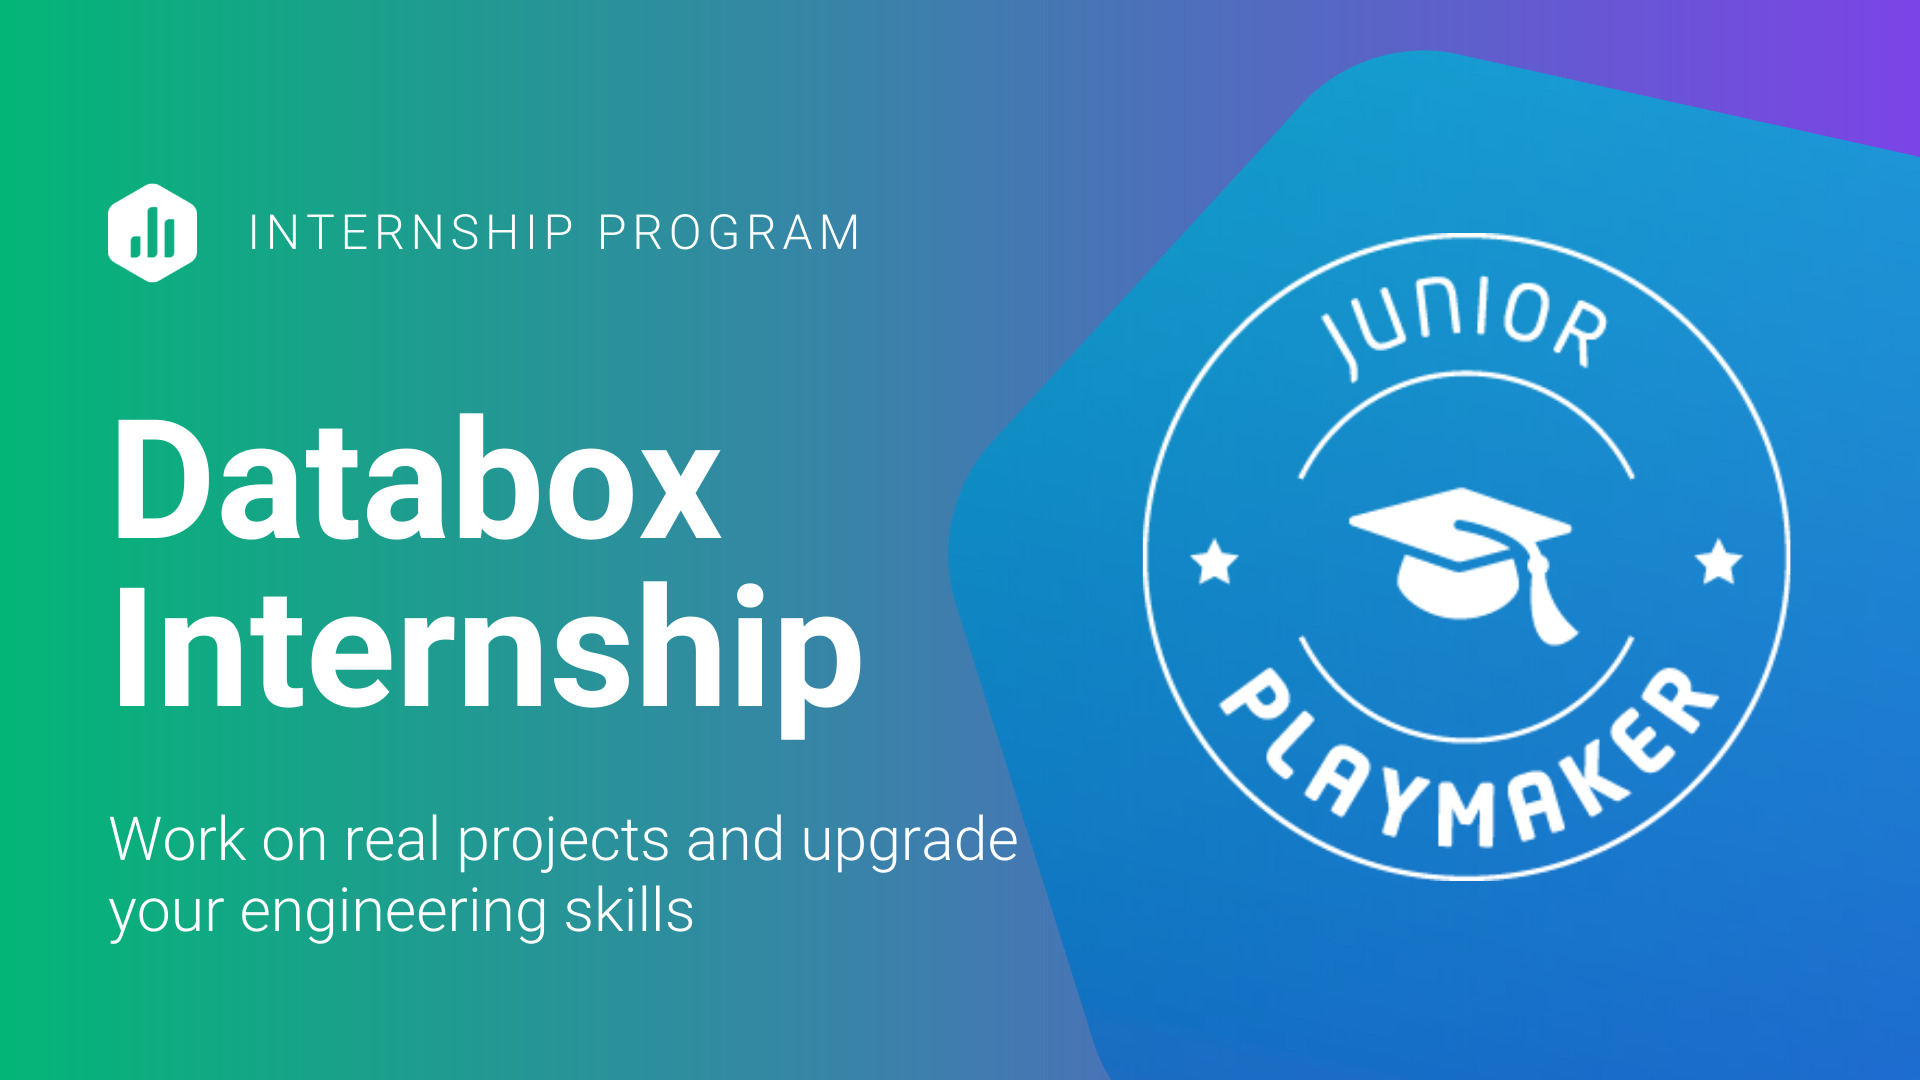 Junior Playmaker: An Internship Program at Databox